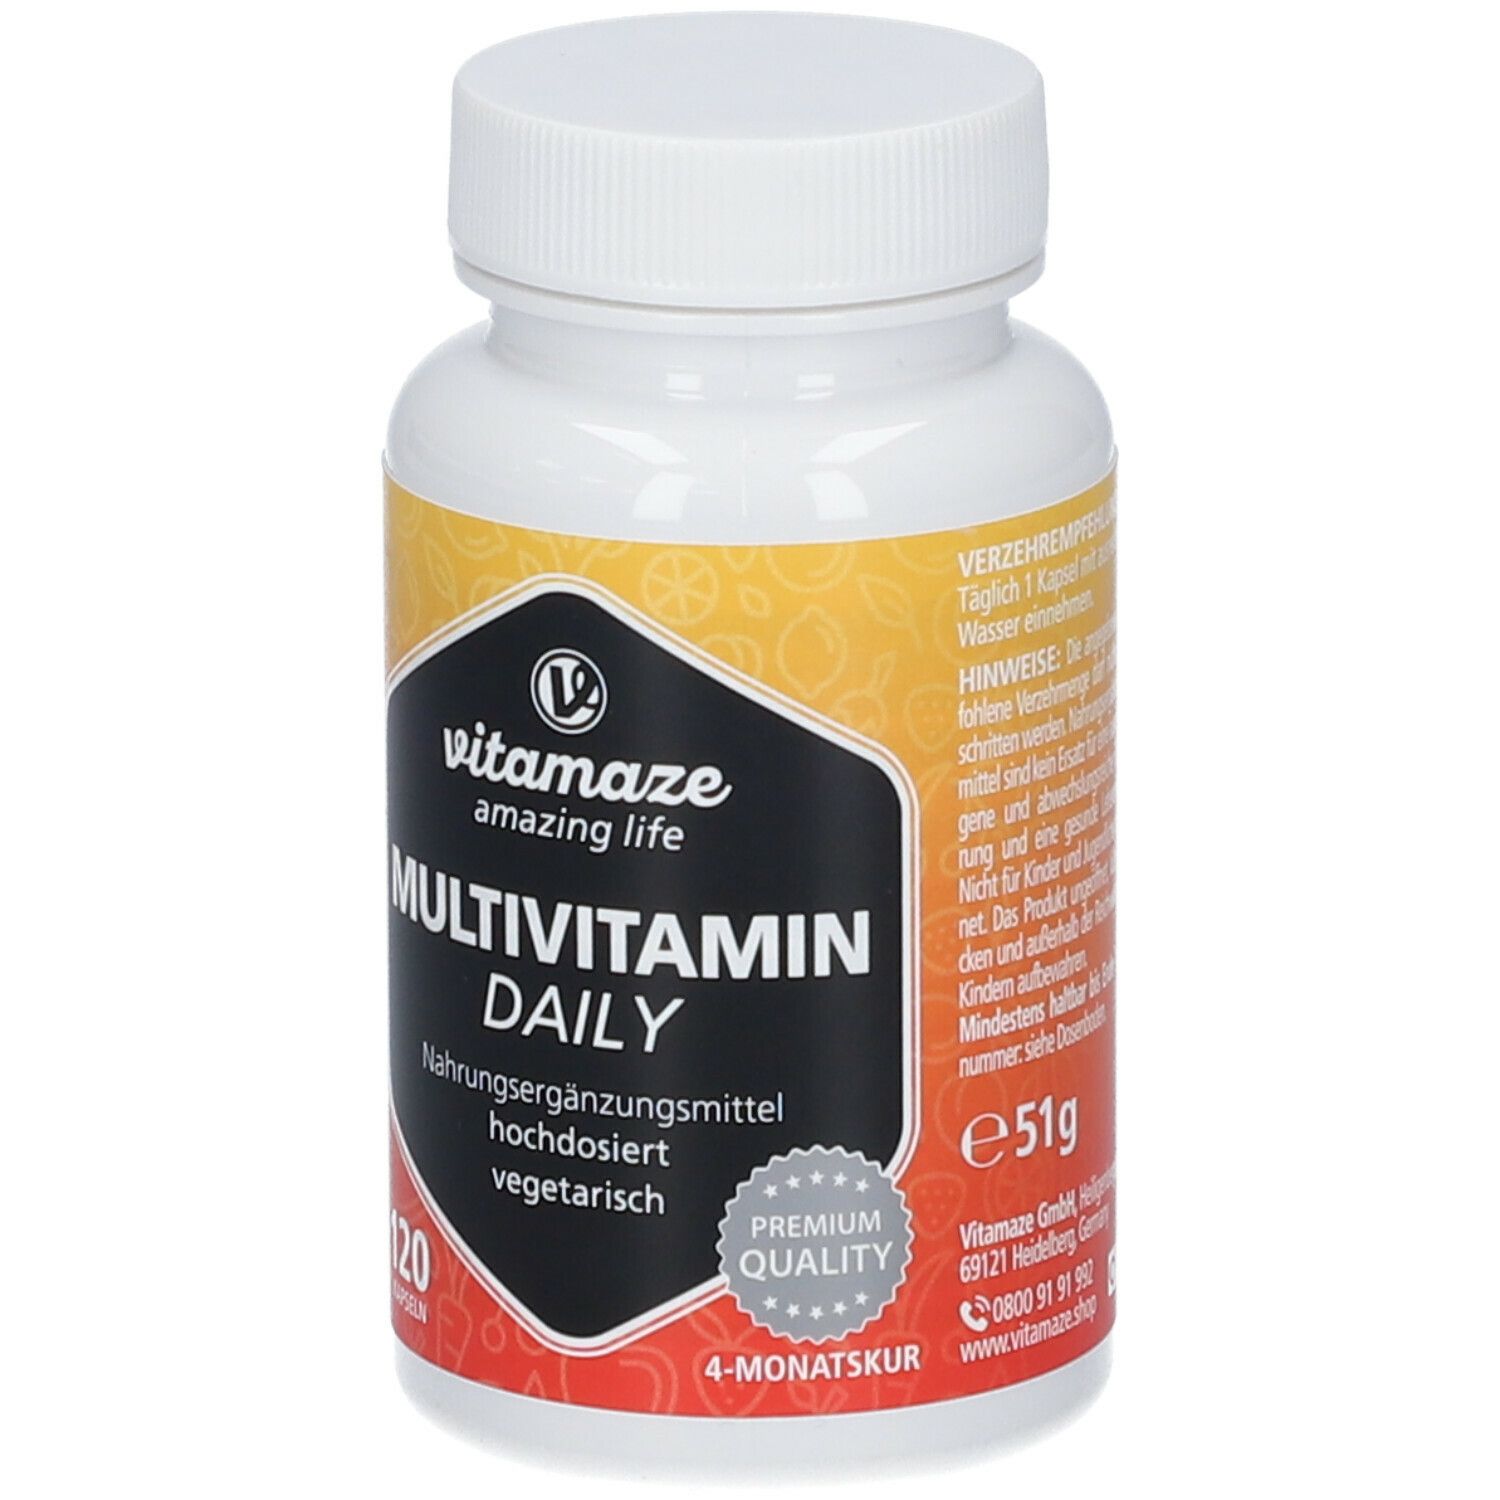 Multivitamin Daily dosage élevé